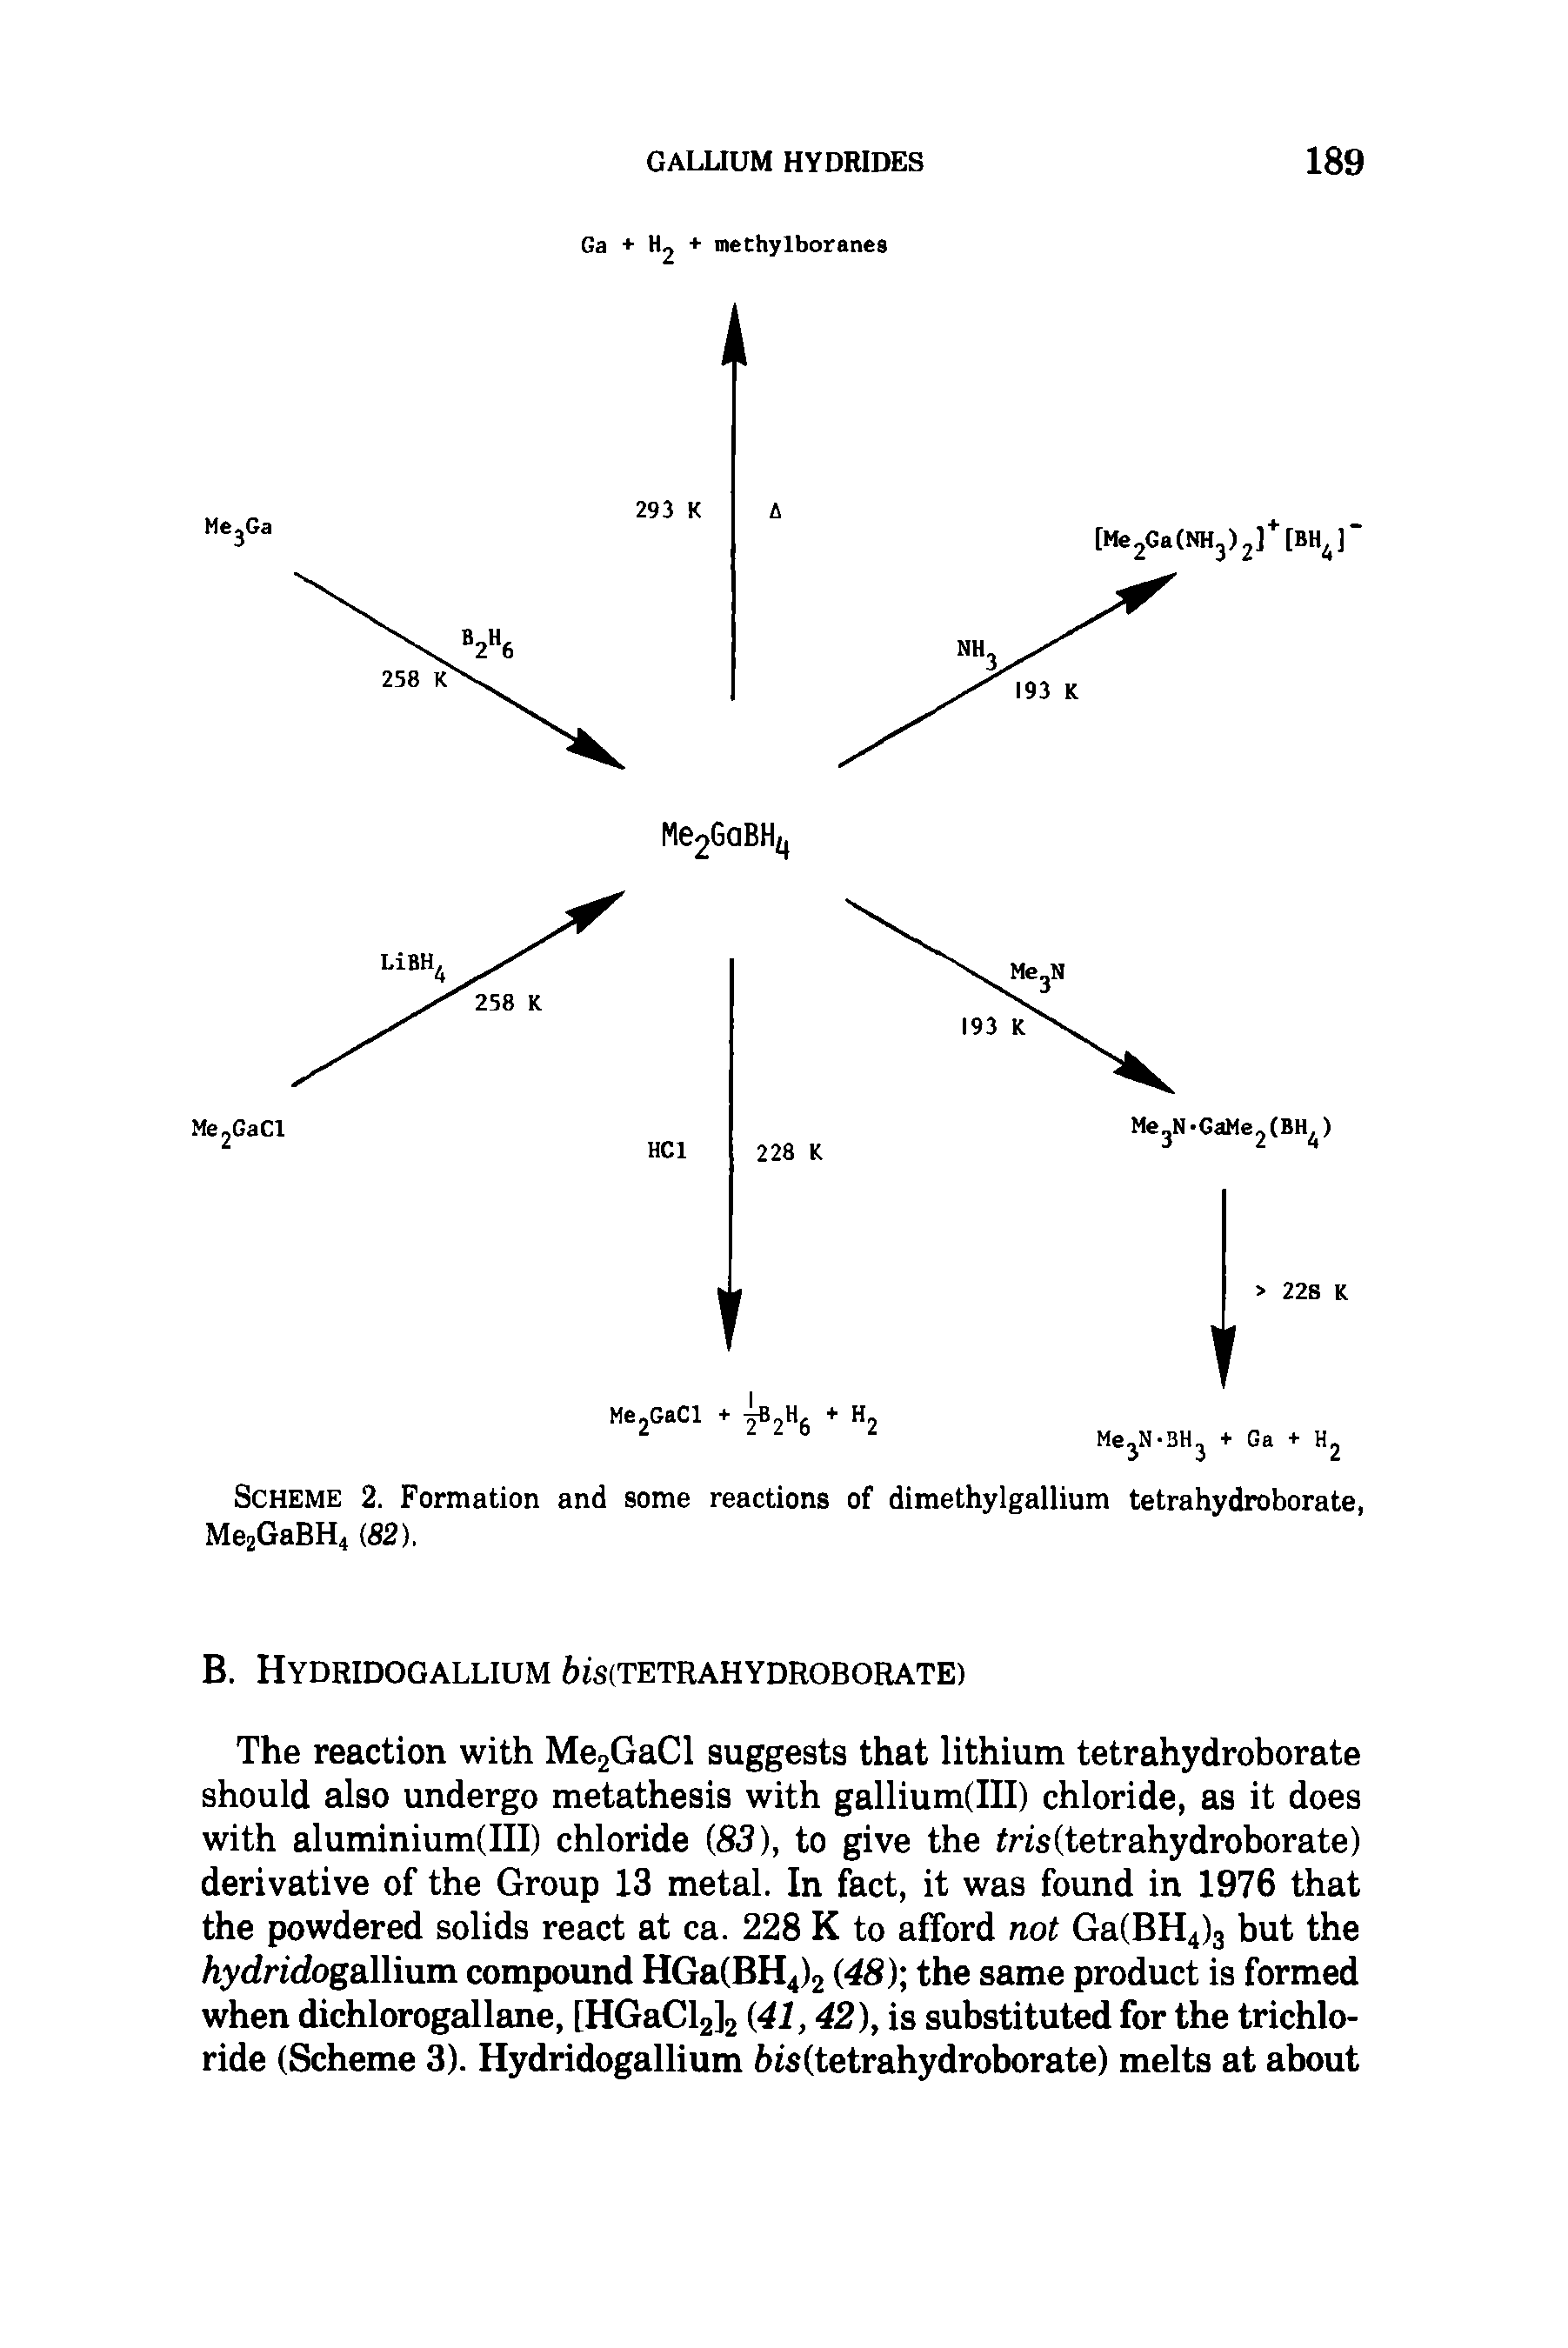 Scheme 2. Formation and some reactions of dimethylgallium tetrahydroborate, Me2GaBH4 (82).